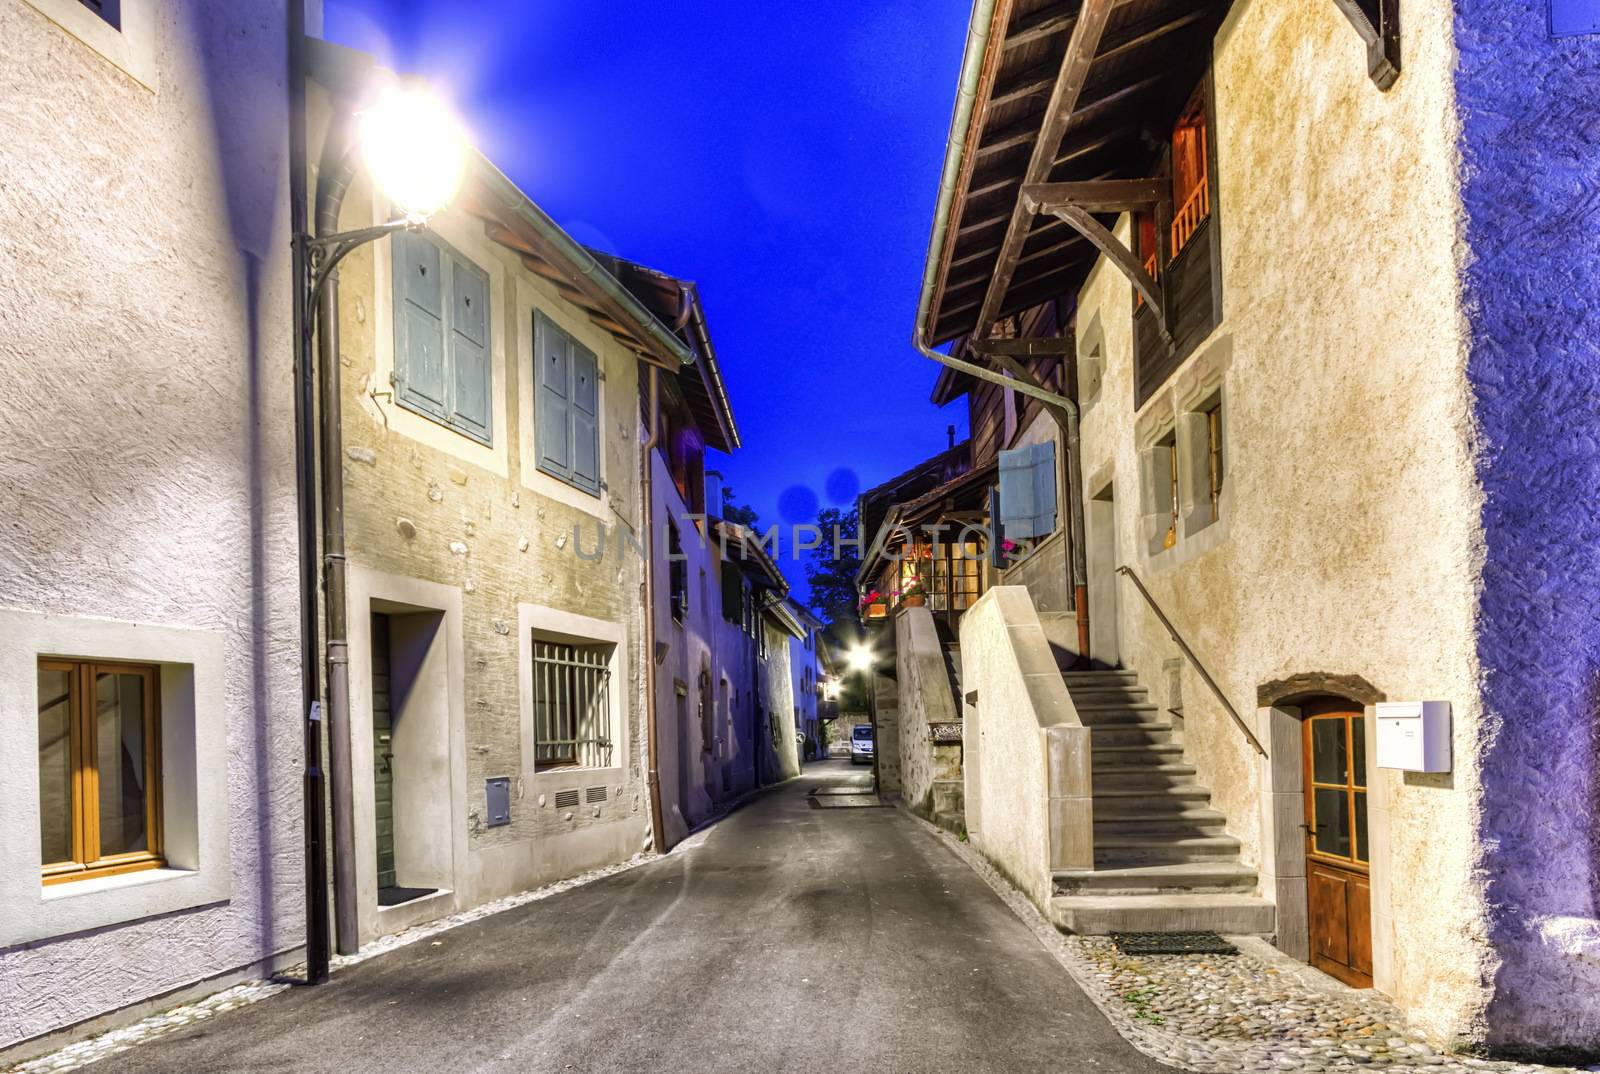 Hermance village street, Geneva, Switzerland by Elenaphotos21